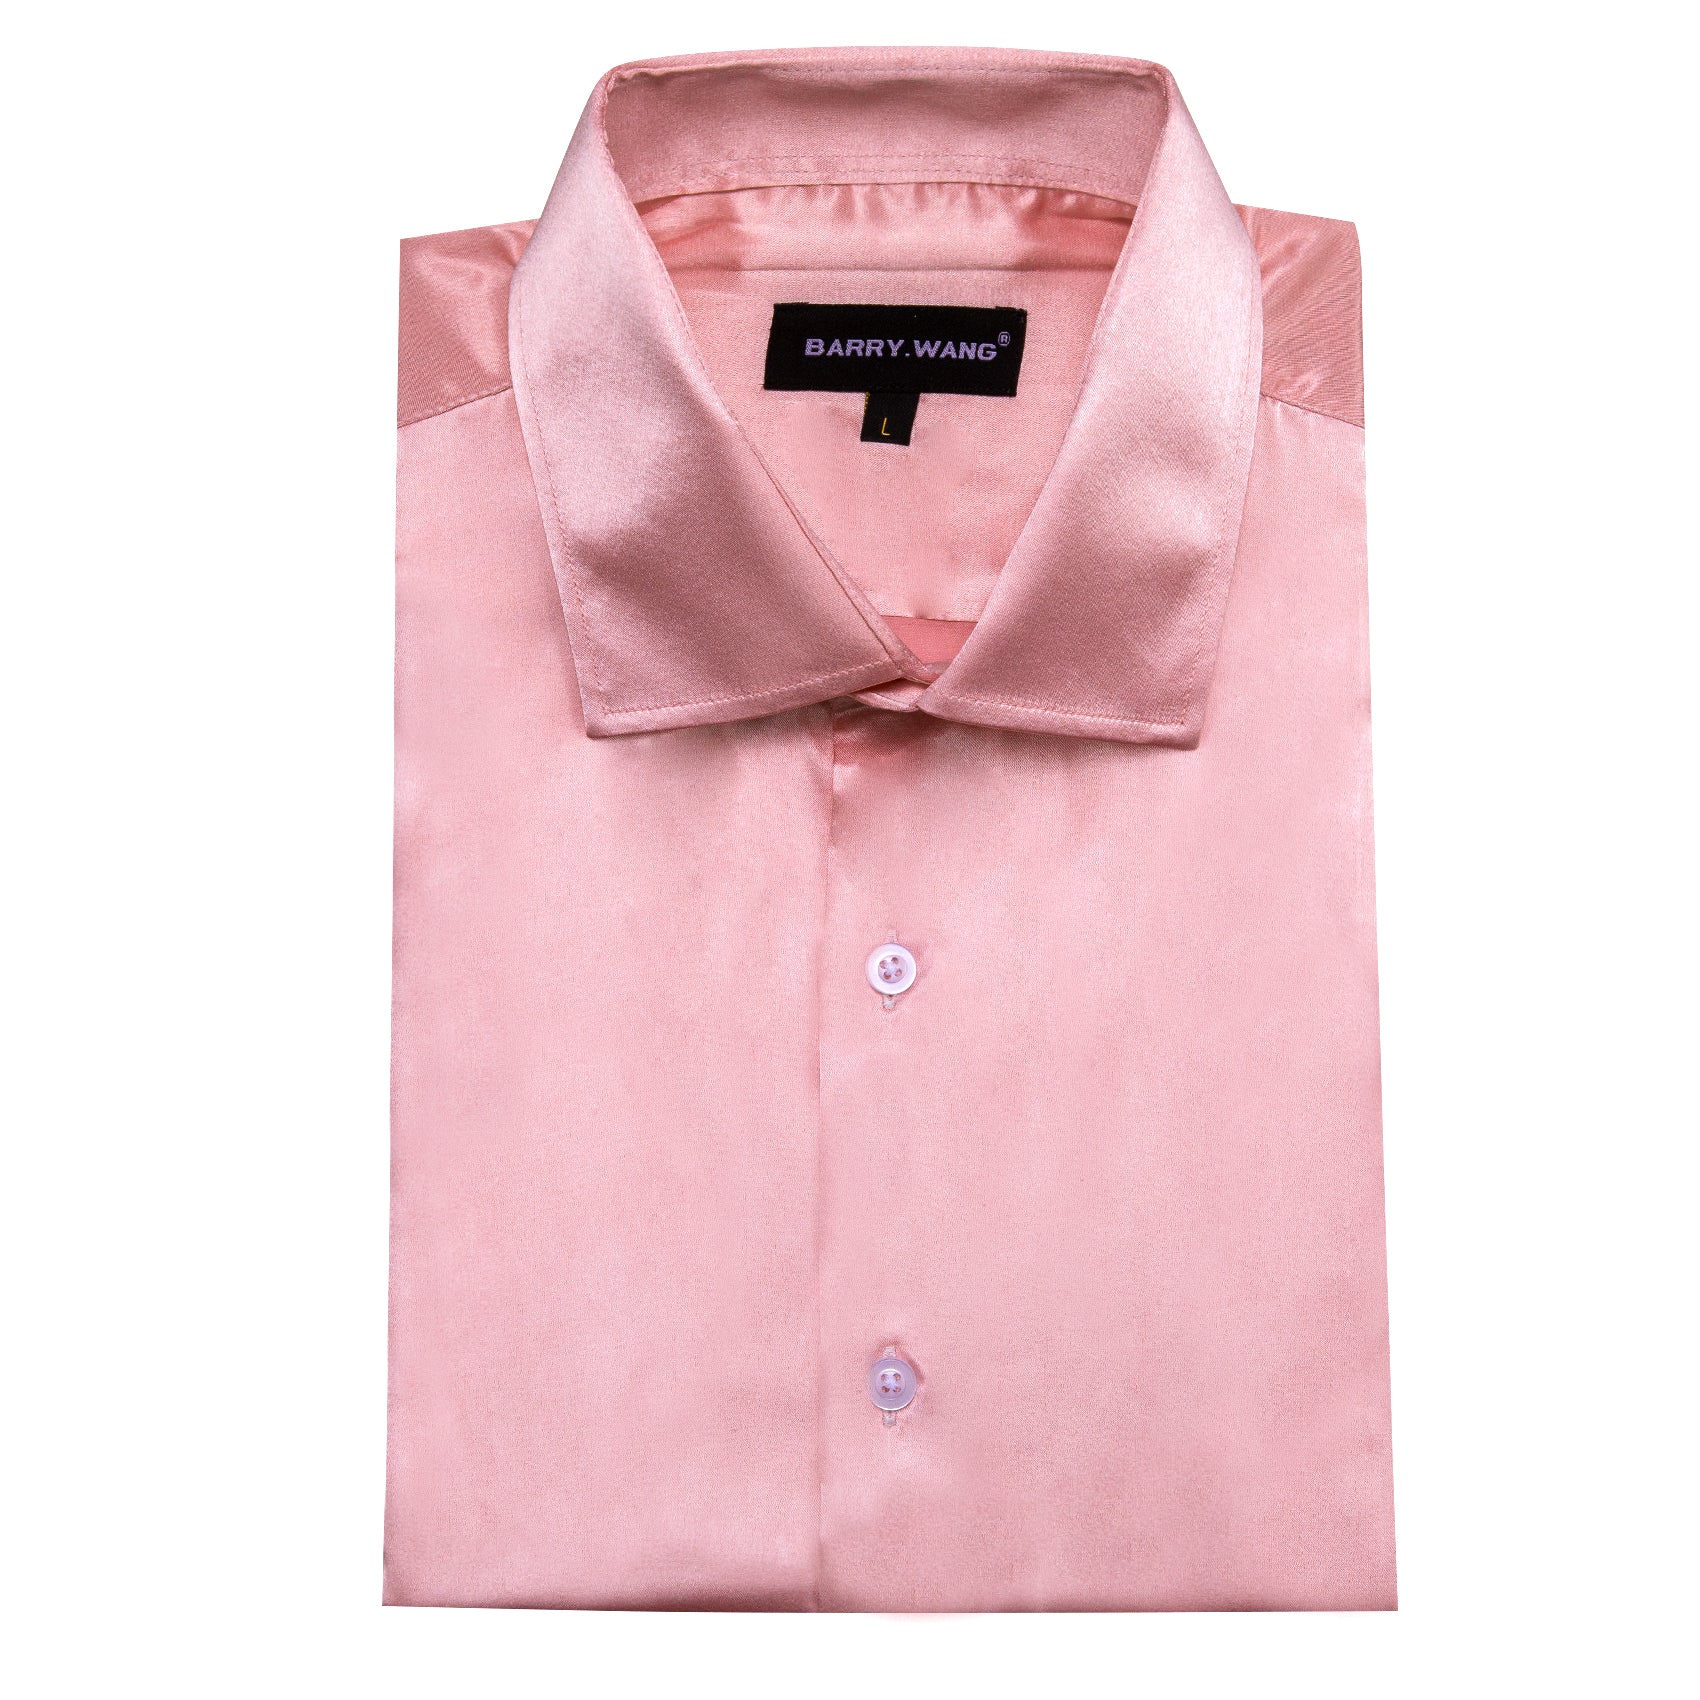 Barry.wang Pink Solid Short Sleeves Shirt